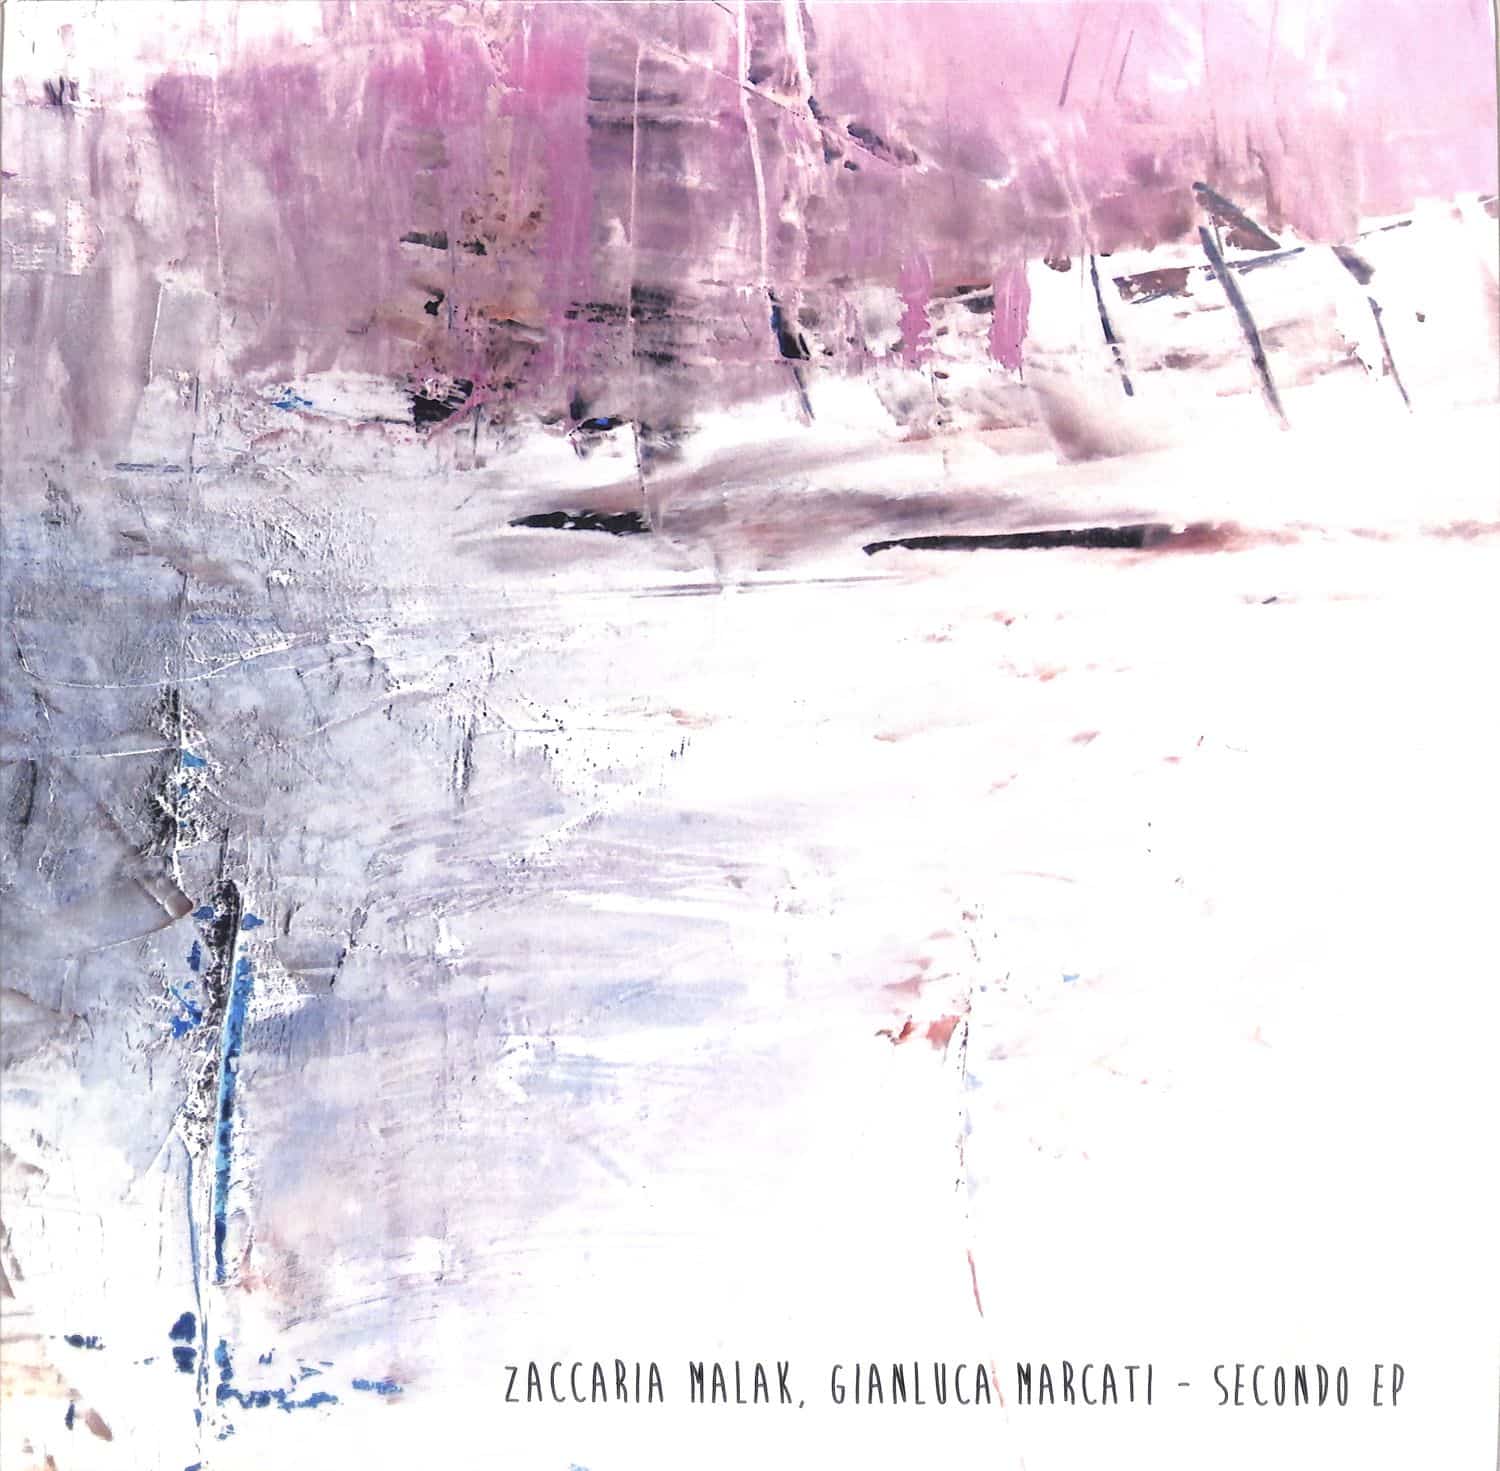 Zaccaria Malak & Gianluca Marcati - SECONDO EP